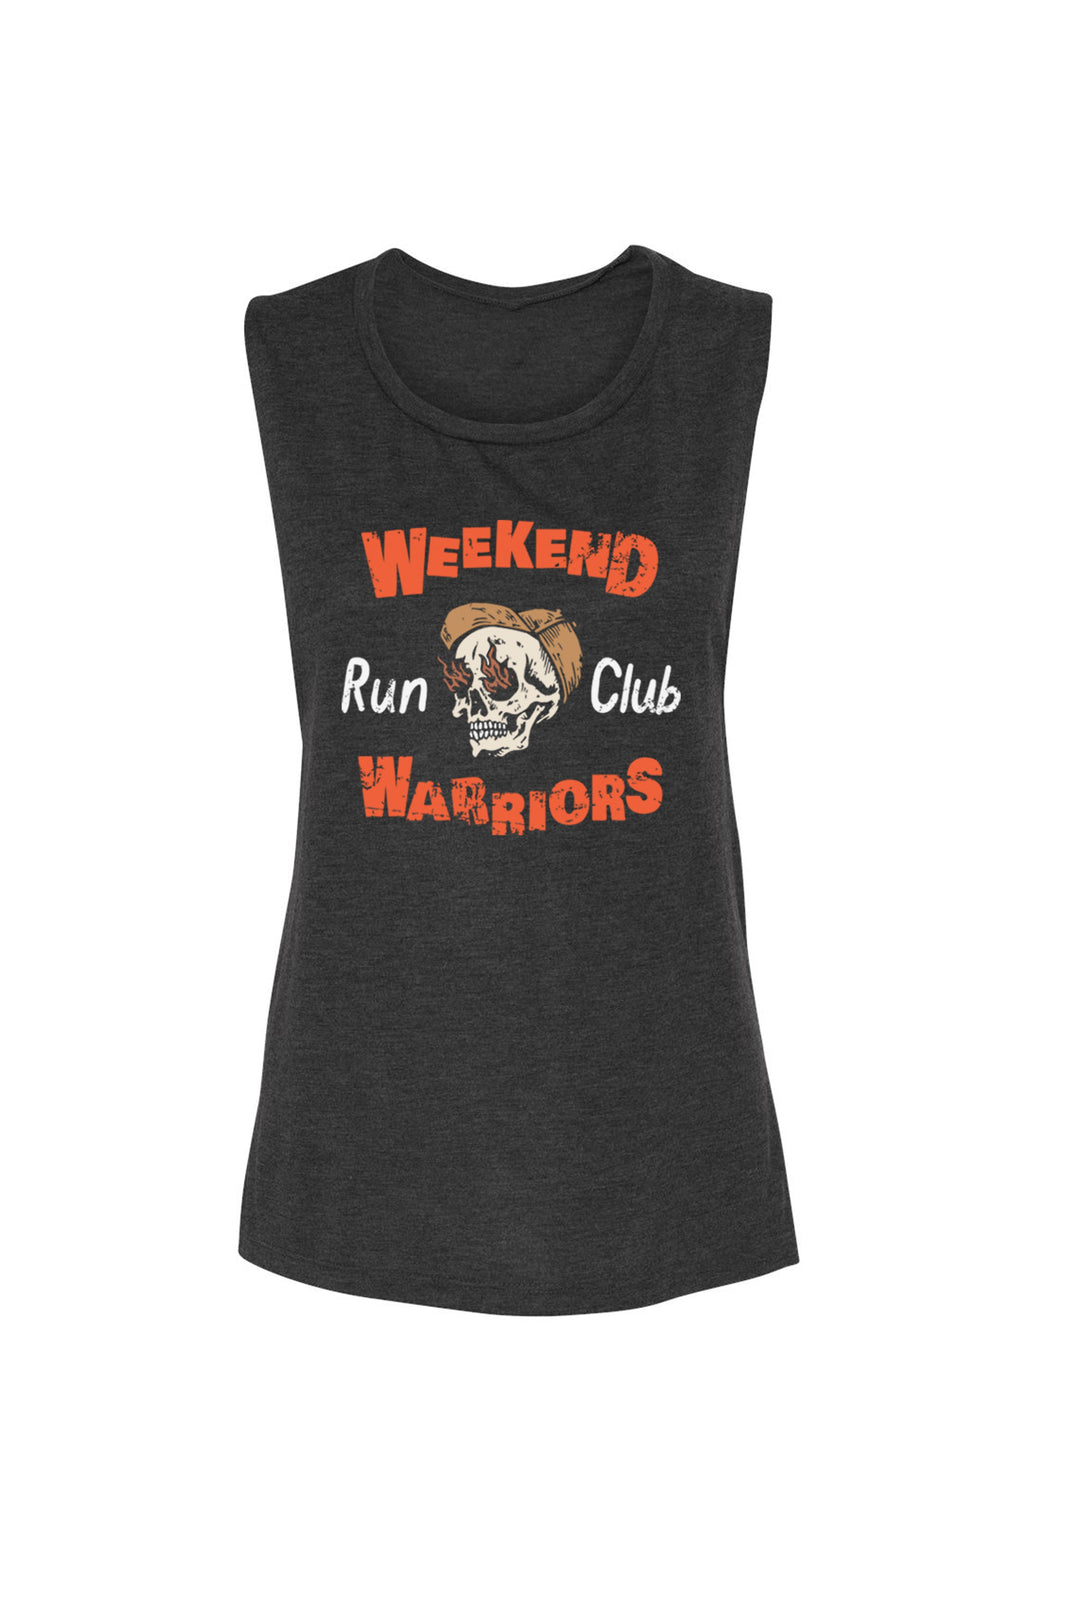 Sarah Marie Design Studio Women's Tank Weekend Warriors Run Club Women's Muscle Tank